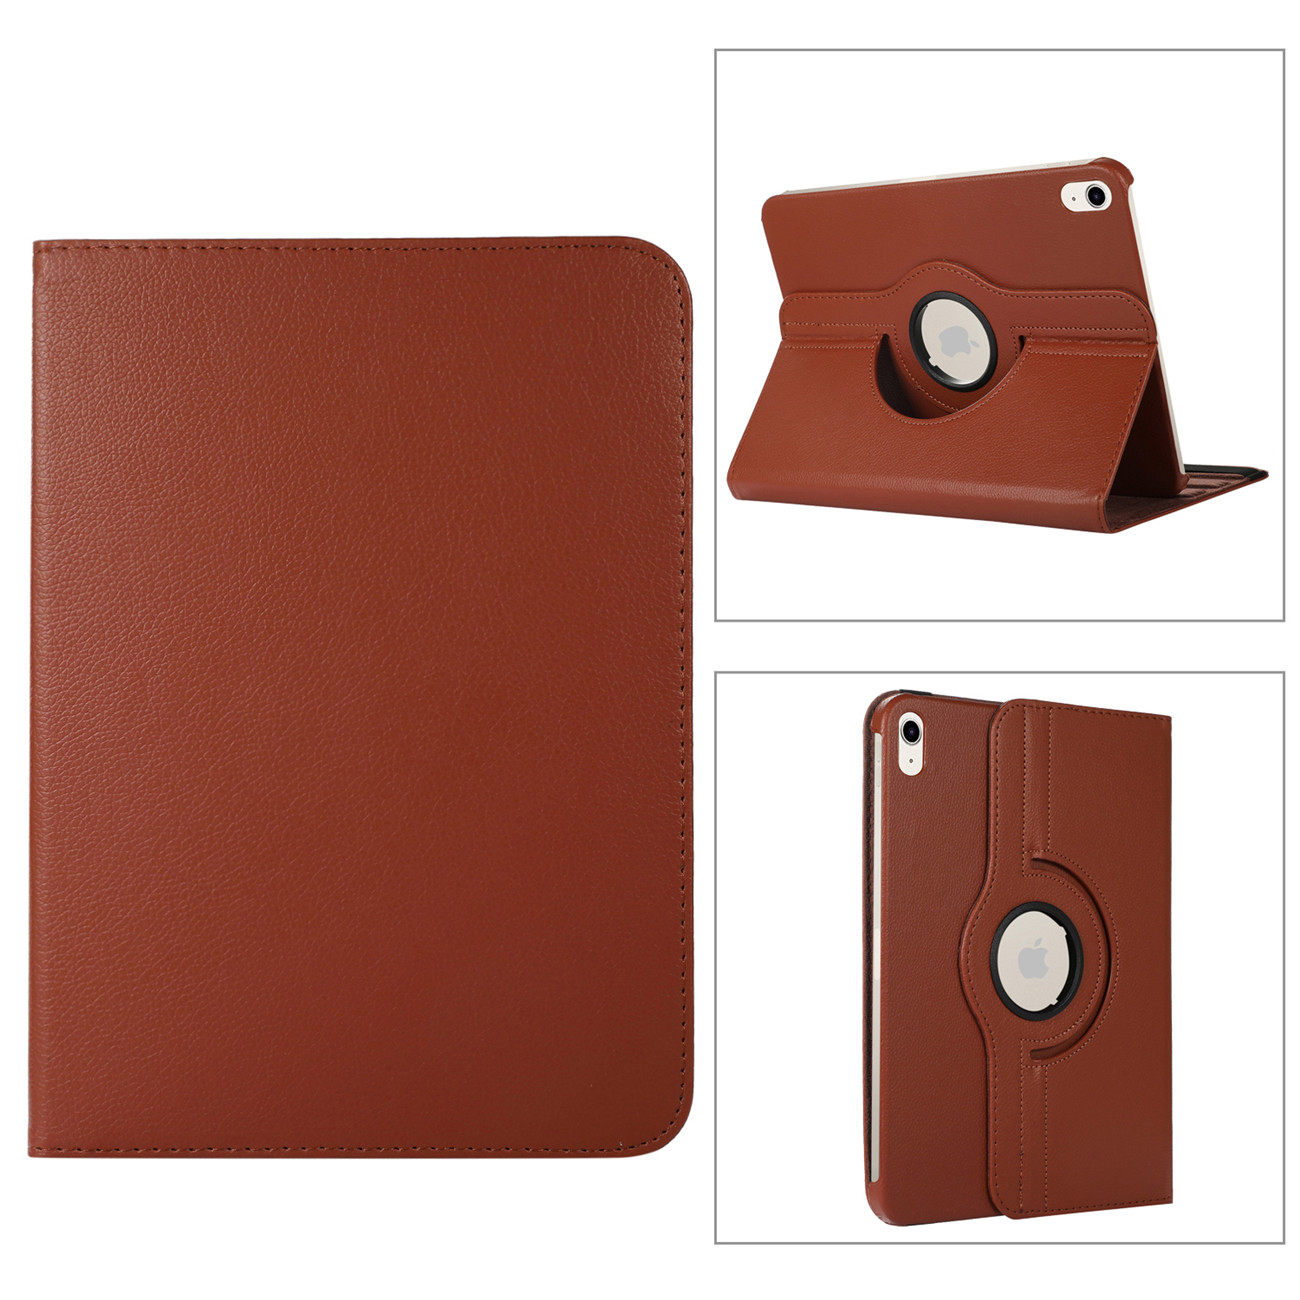 ipad air case leather